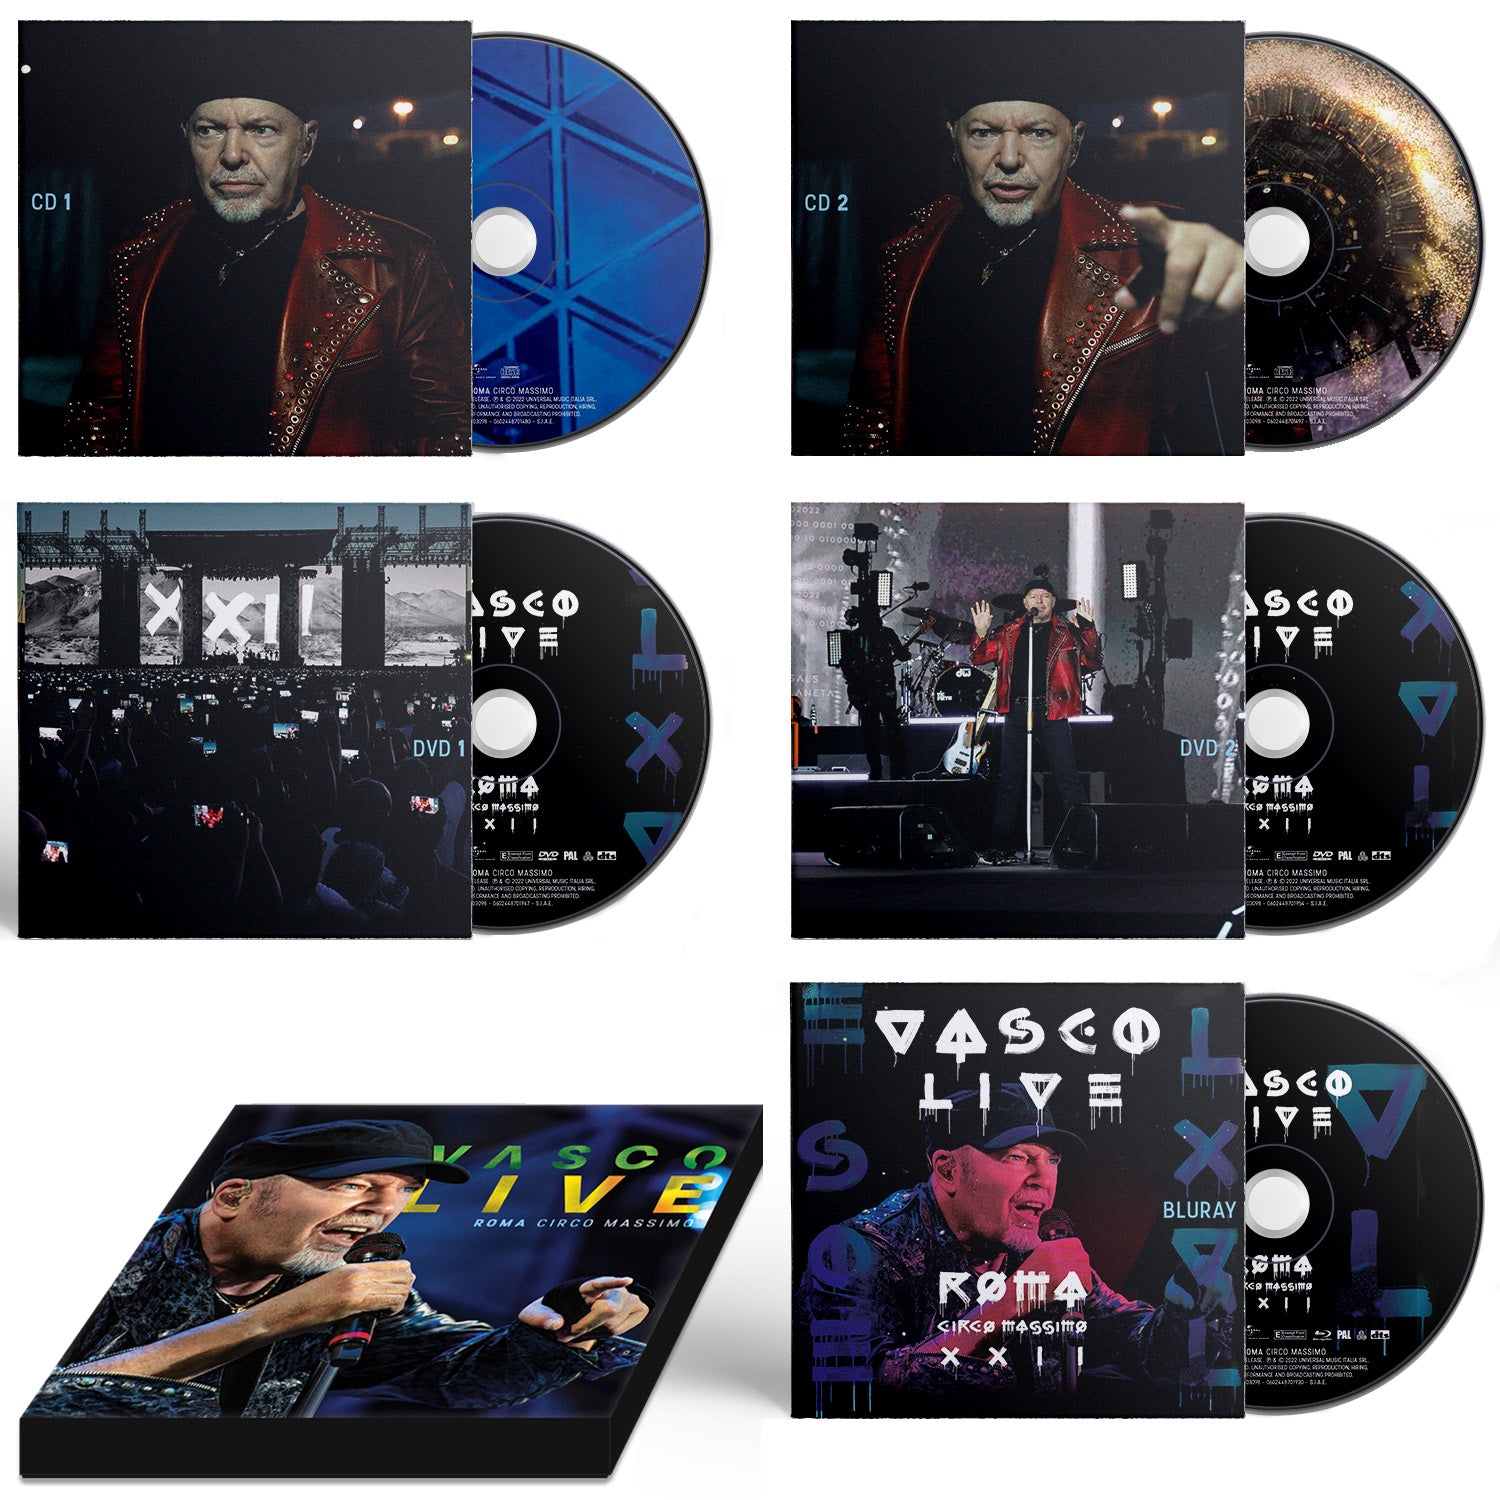 VASCO LIVE - Roma Circo Massimo  2CD + 2DVD + Blu-ray – Universal Music  Italia